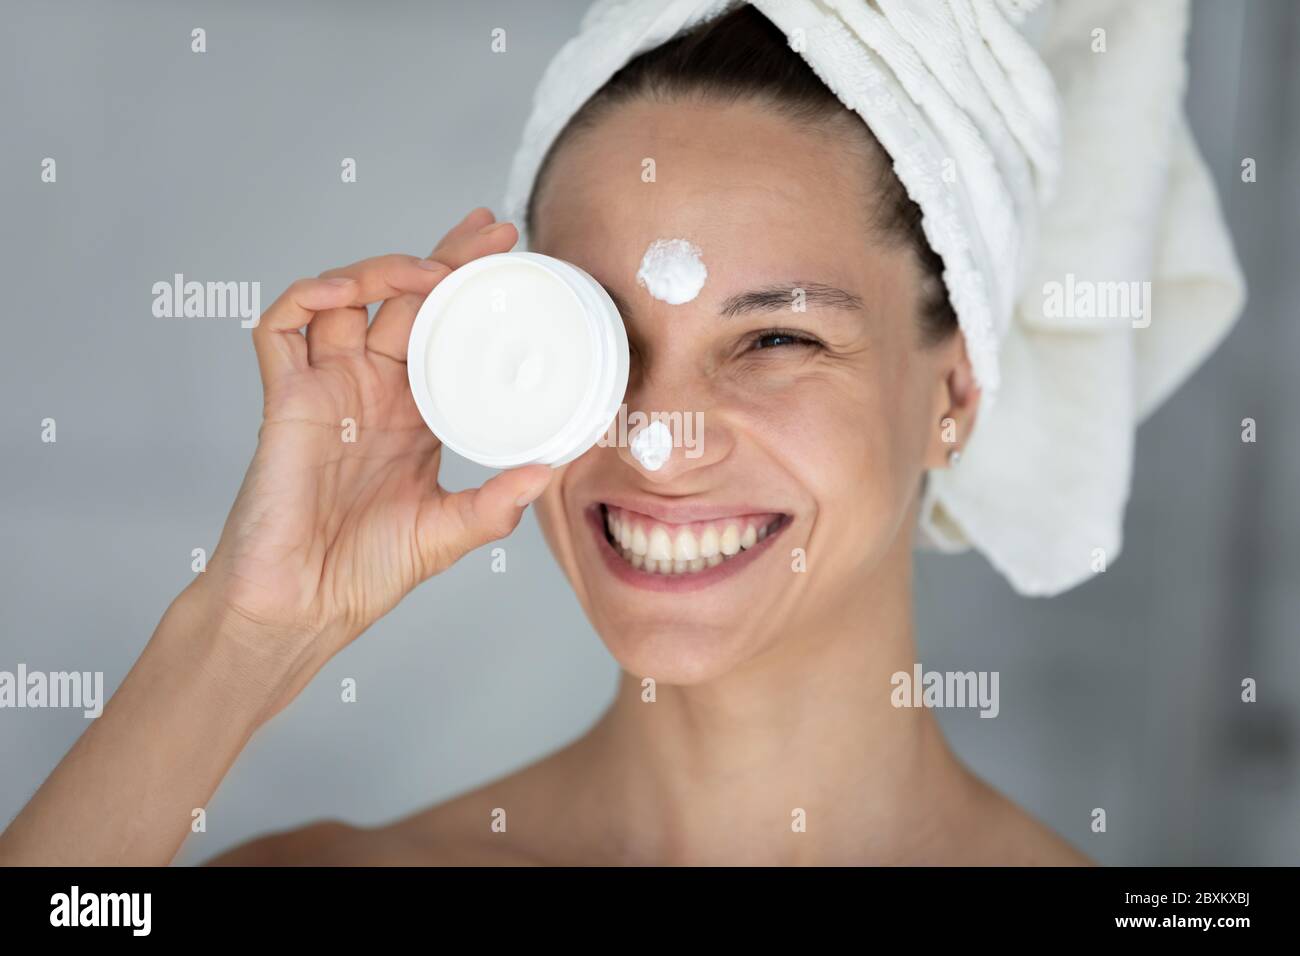 Head shot portrait smiling woman holding white face cream jar Stock Photo